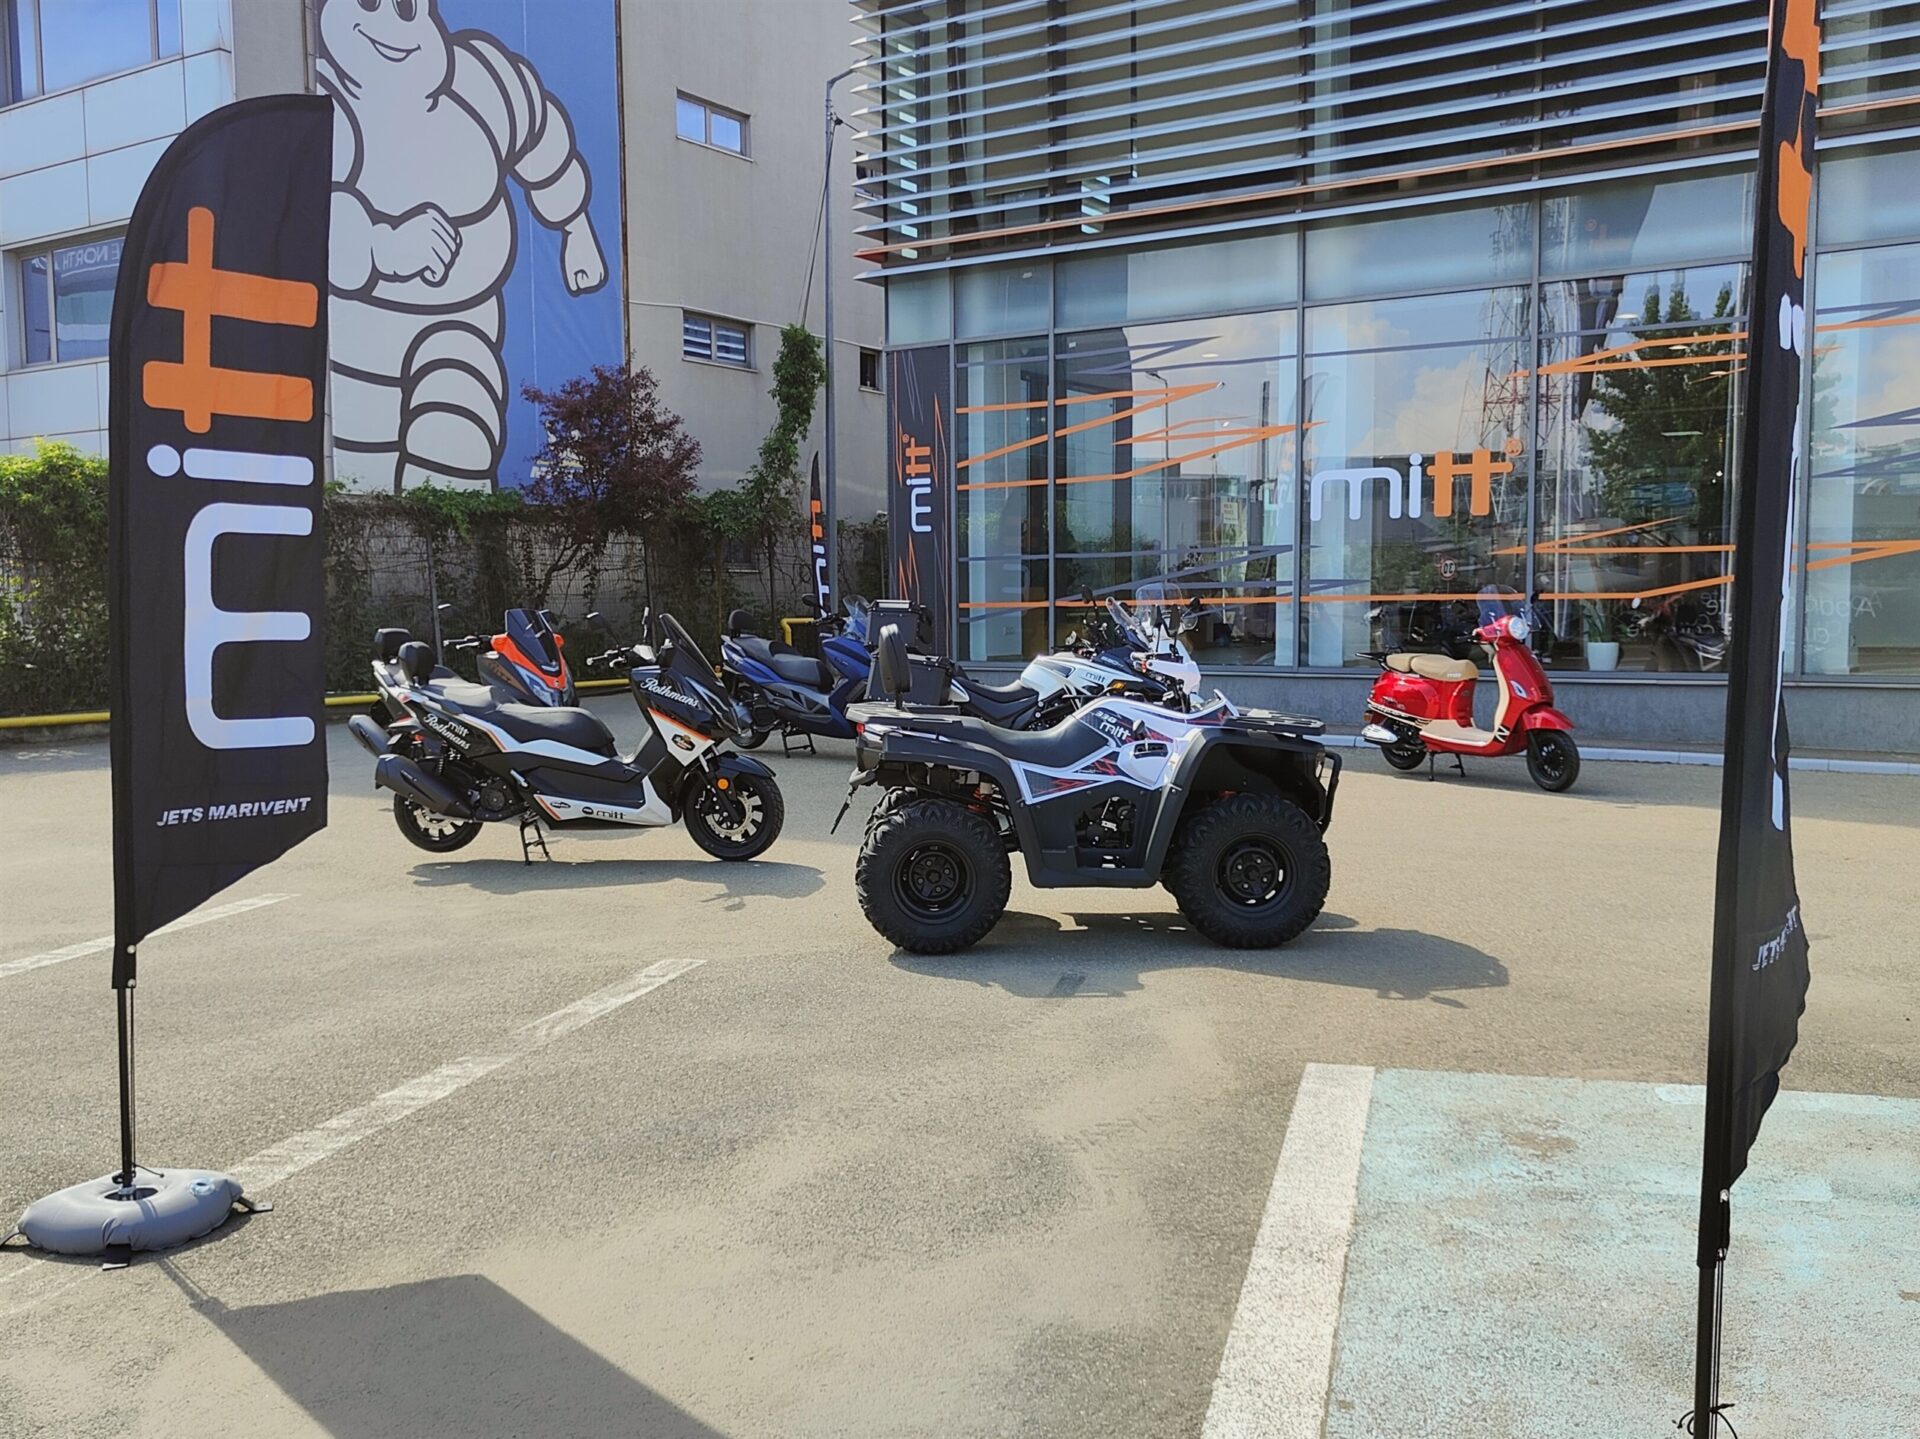 MITT Motorcycles in Romania